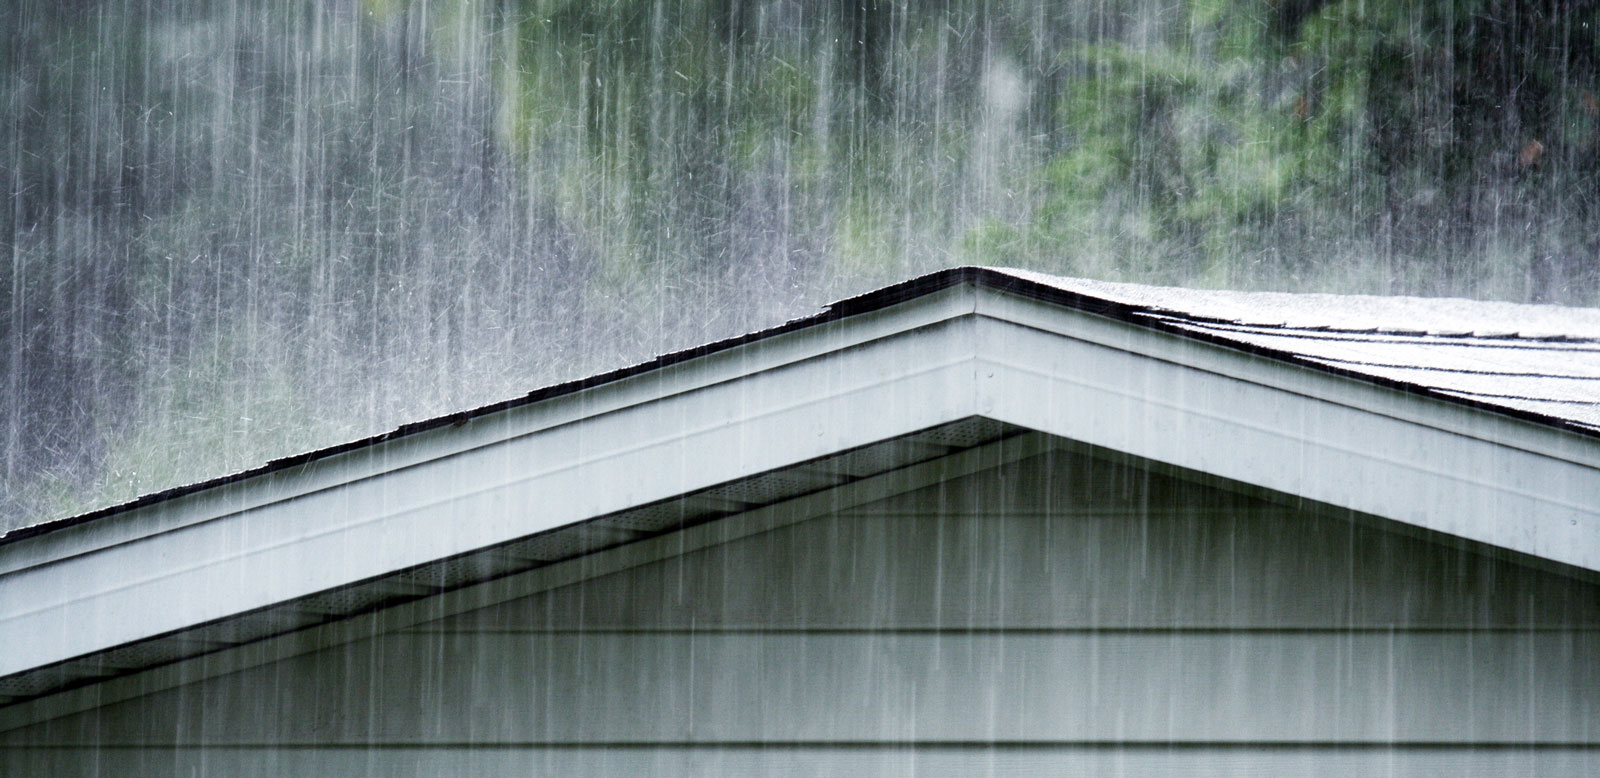 raining on the roof